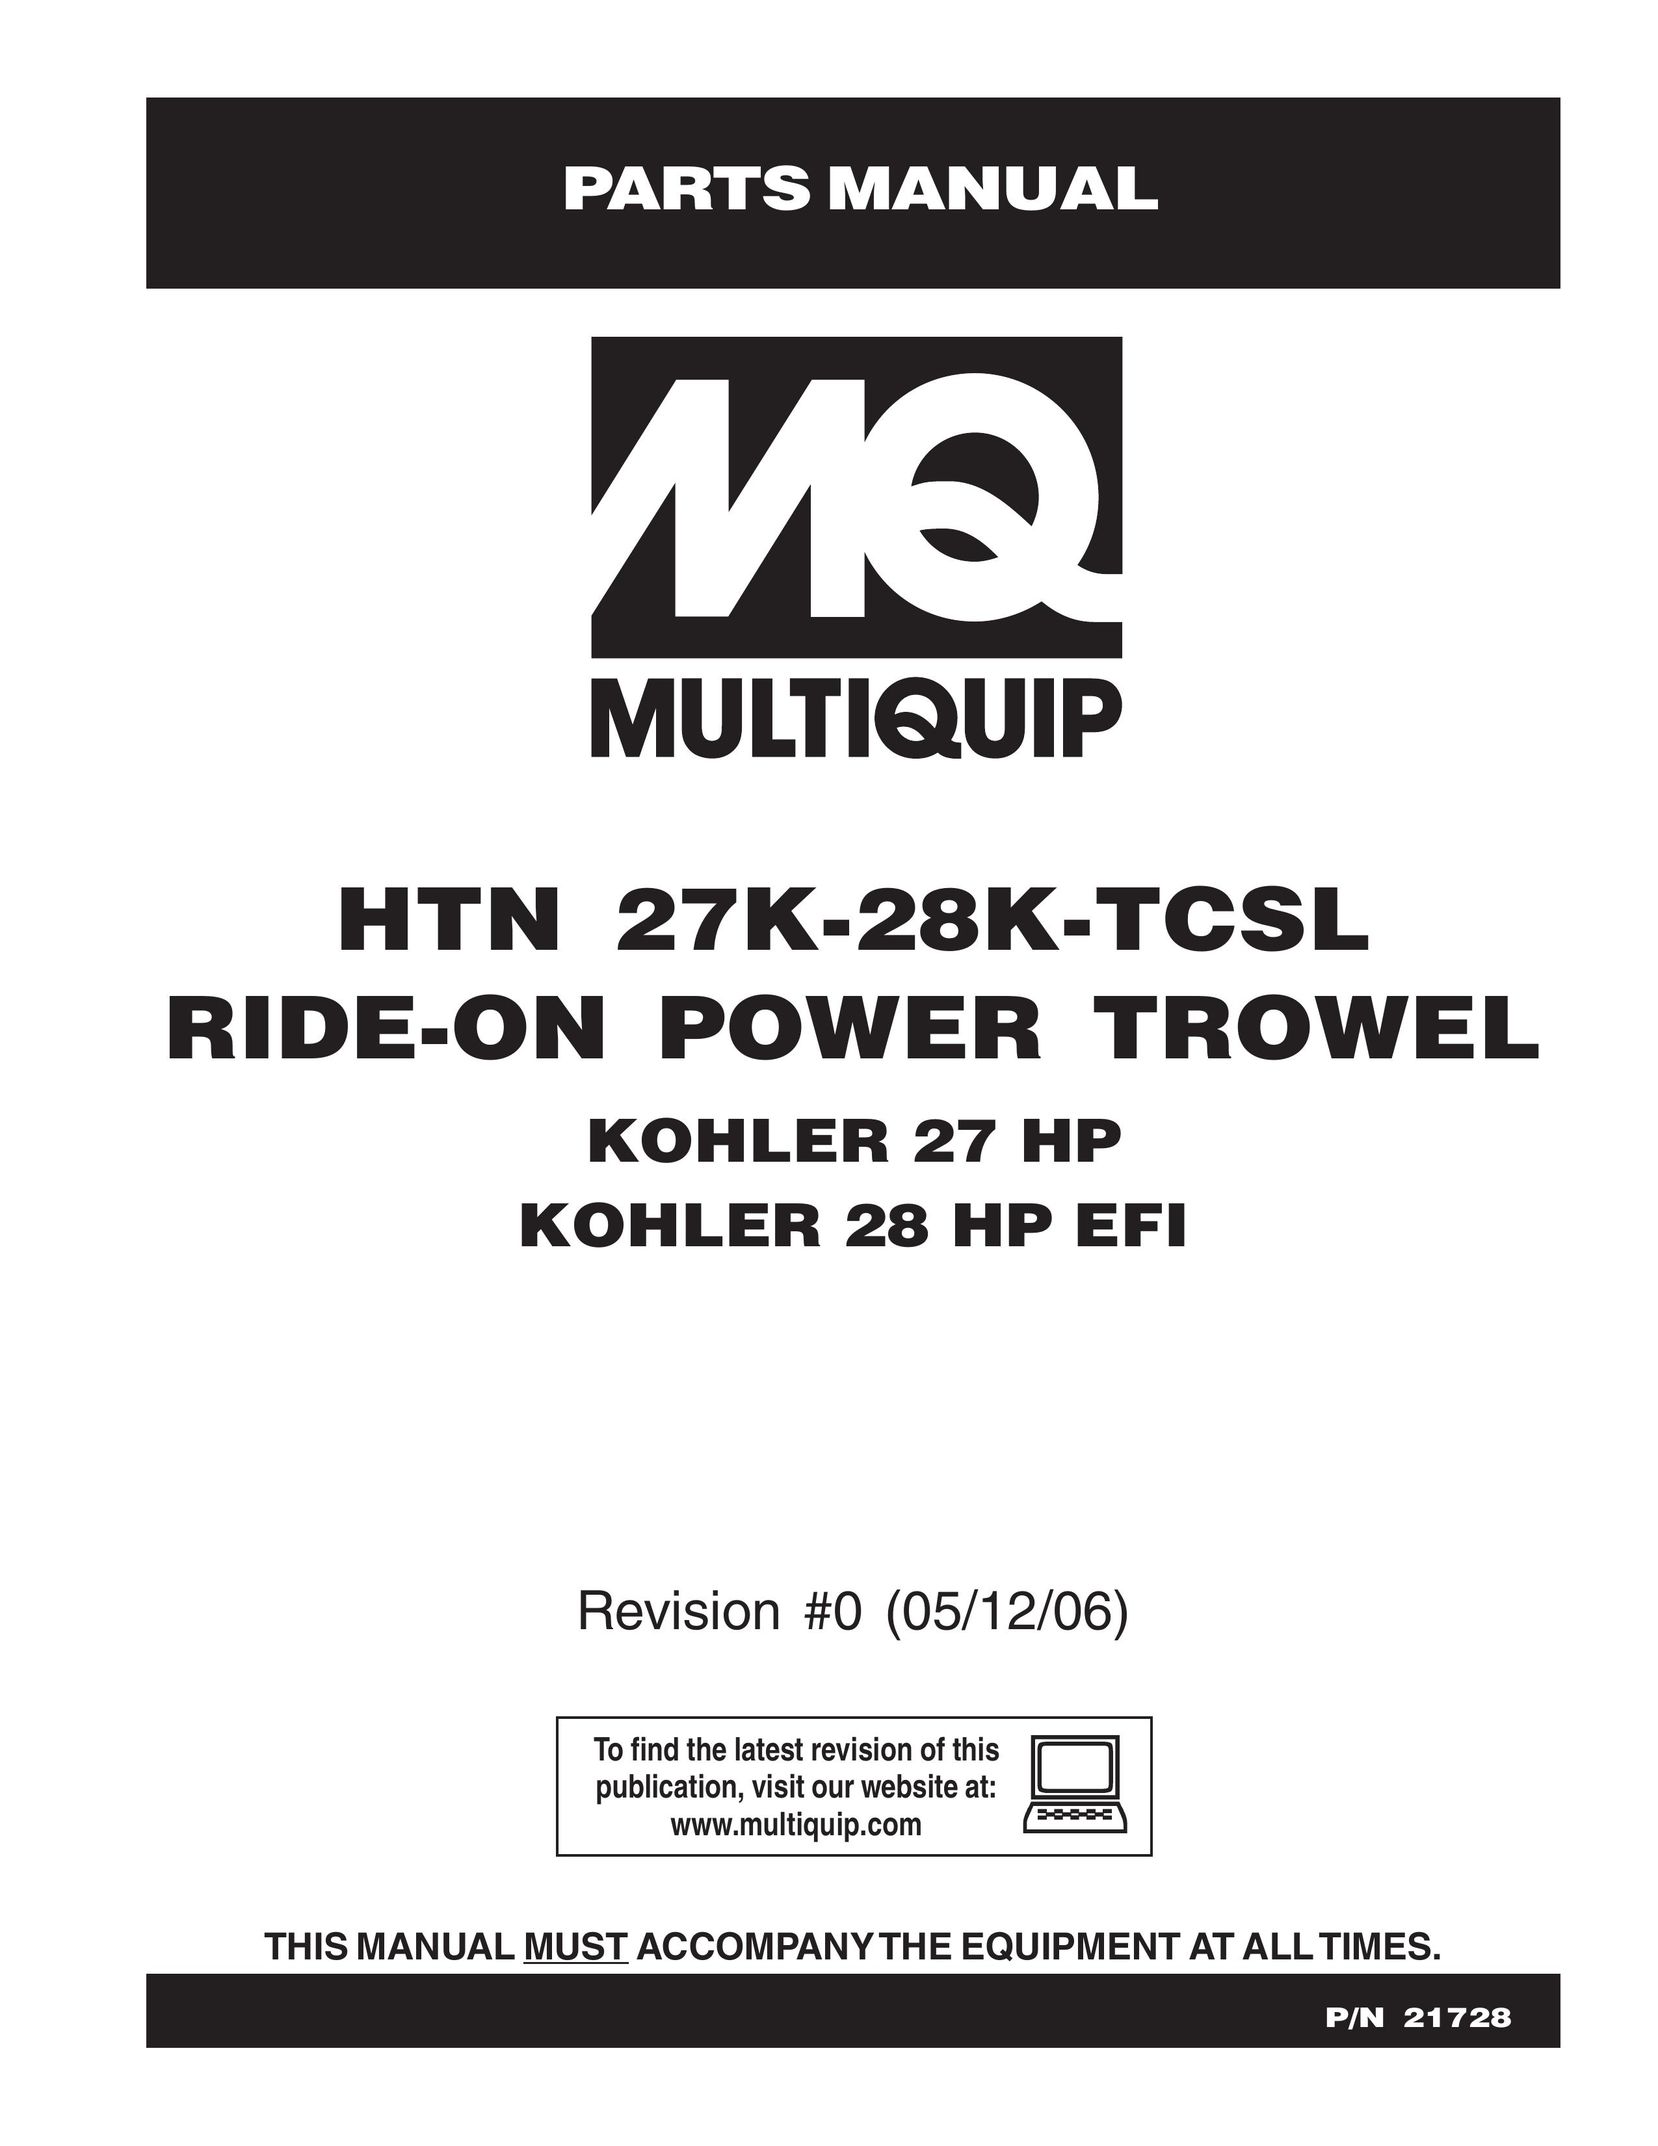 Multiquip HTN 27K-28K-TCSL Model Vehicle User Manual